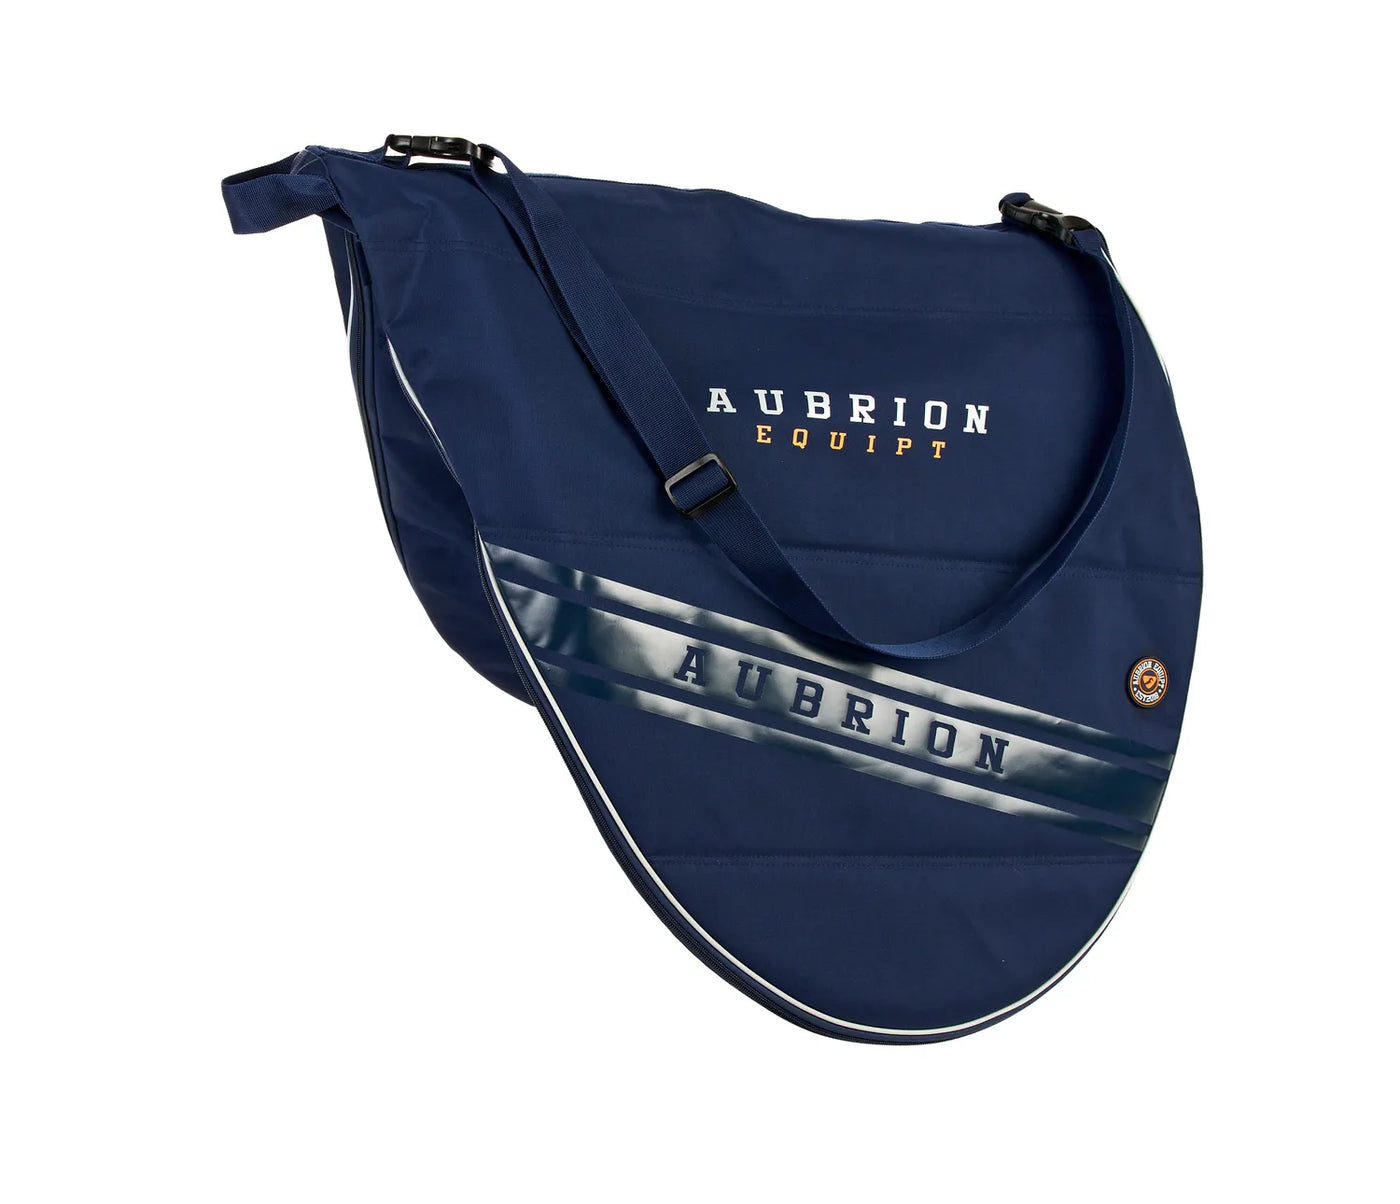 Aubrion Equipt Saddle Bag - 5990